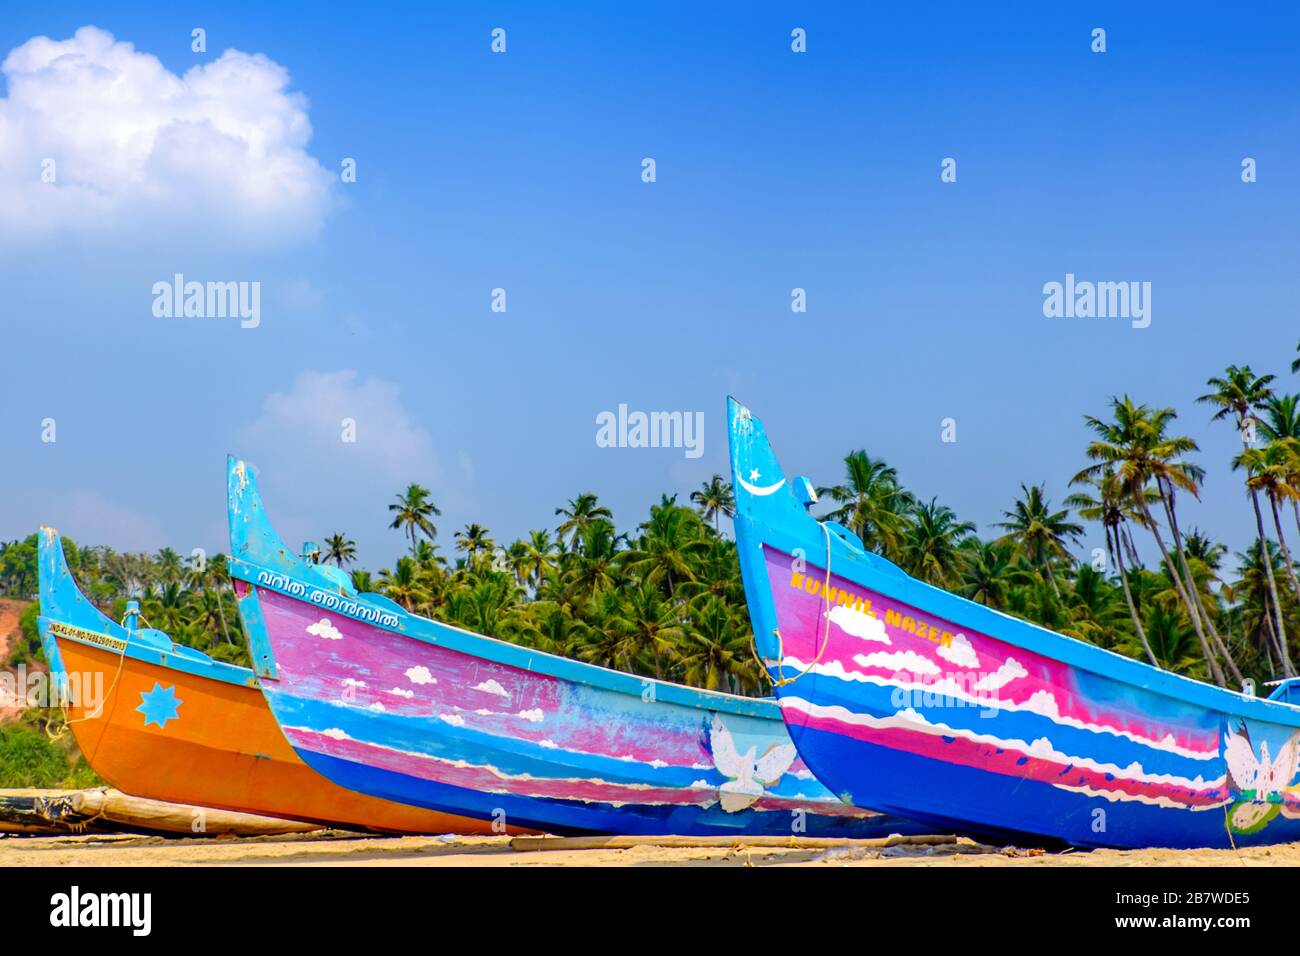 Barcos de pesca pintados de colores brillantes fotografías e imágenes de  alta resolución - Alamy